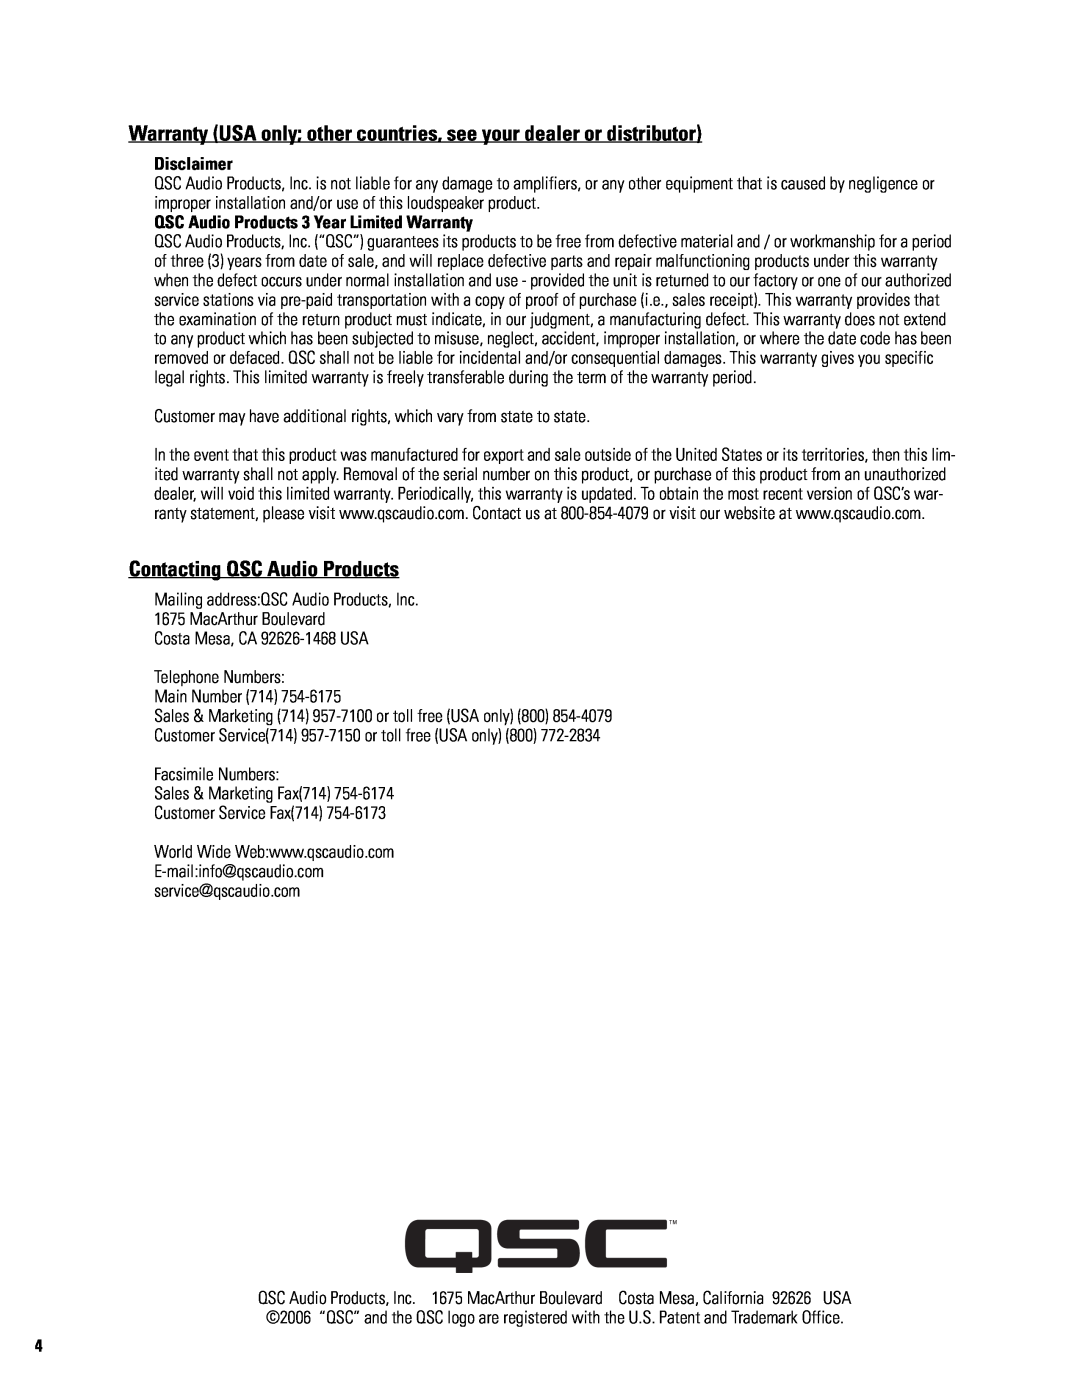 QSC Audio SC-322X specifications Contacting QSC Audio Products, Disclaimer, QSC Audio Products 3 Year Limited Warranty 